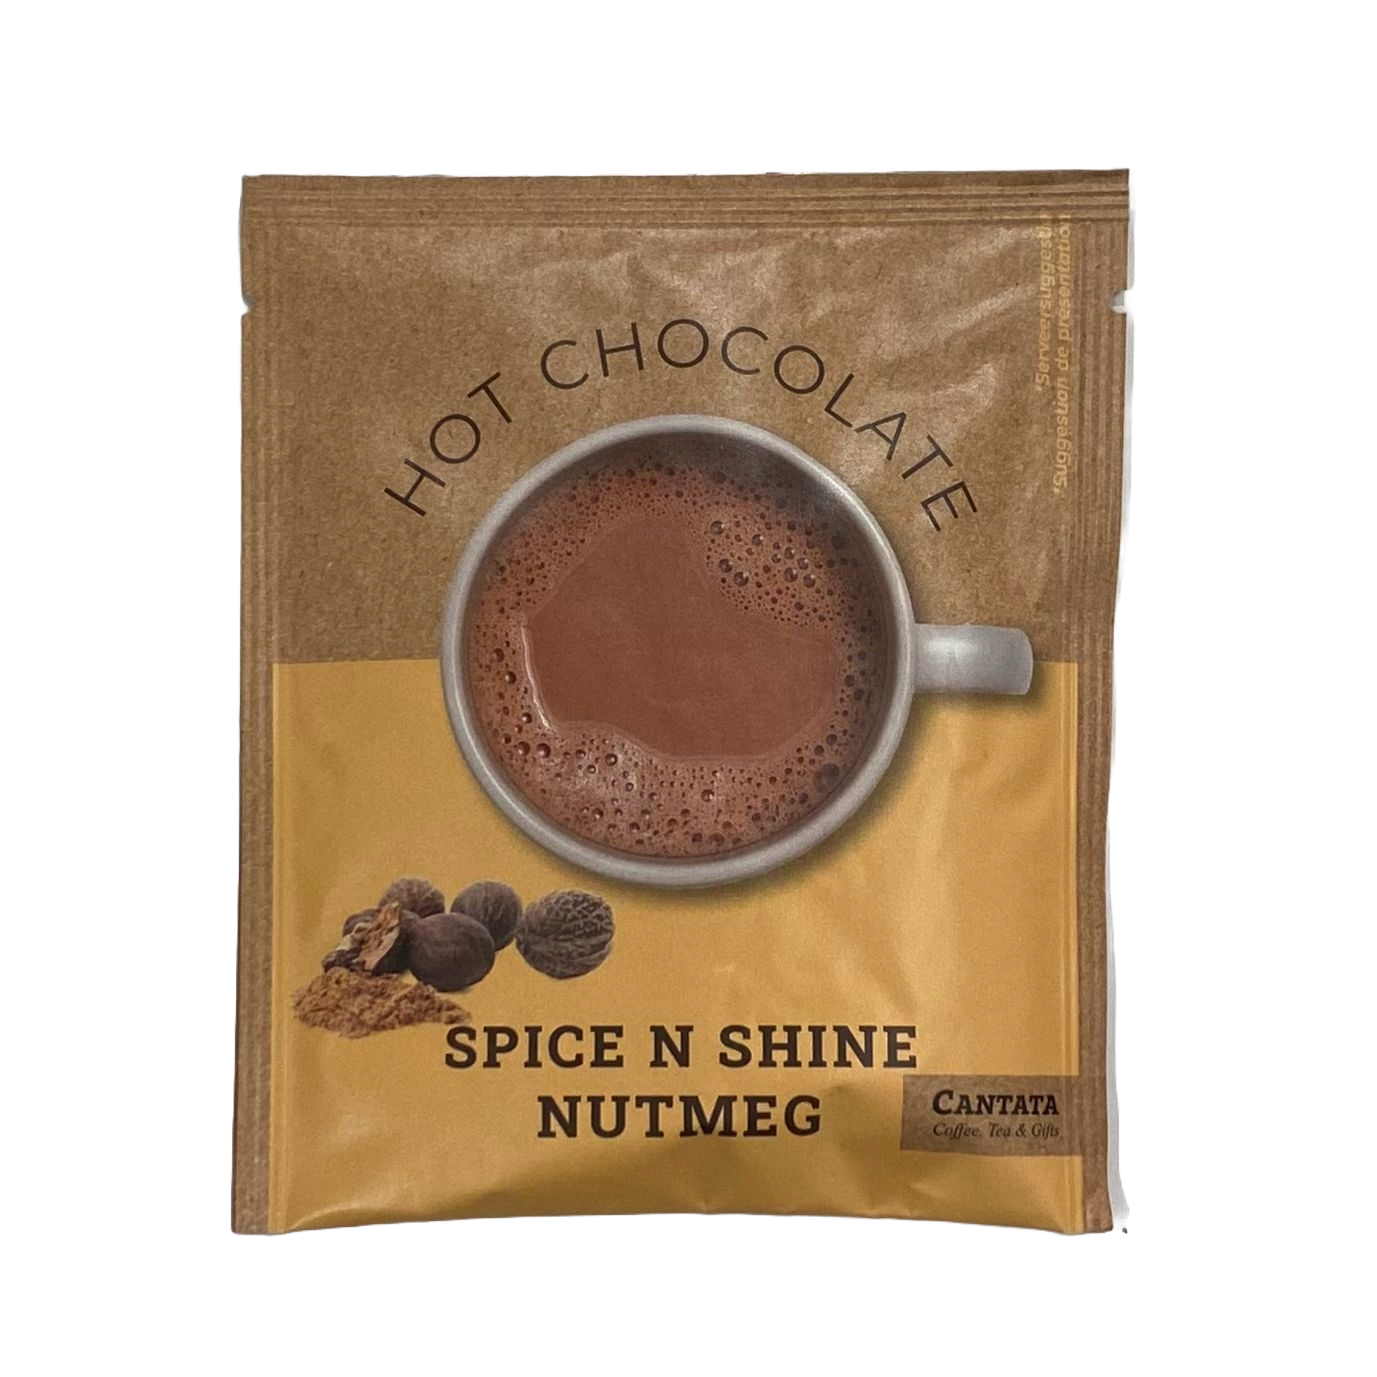 Spice n Shine Nutmeg - Instant Cacao